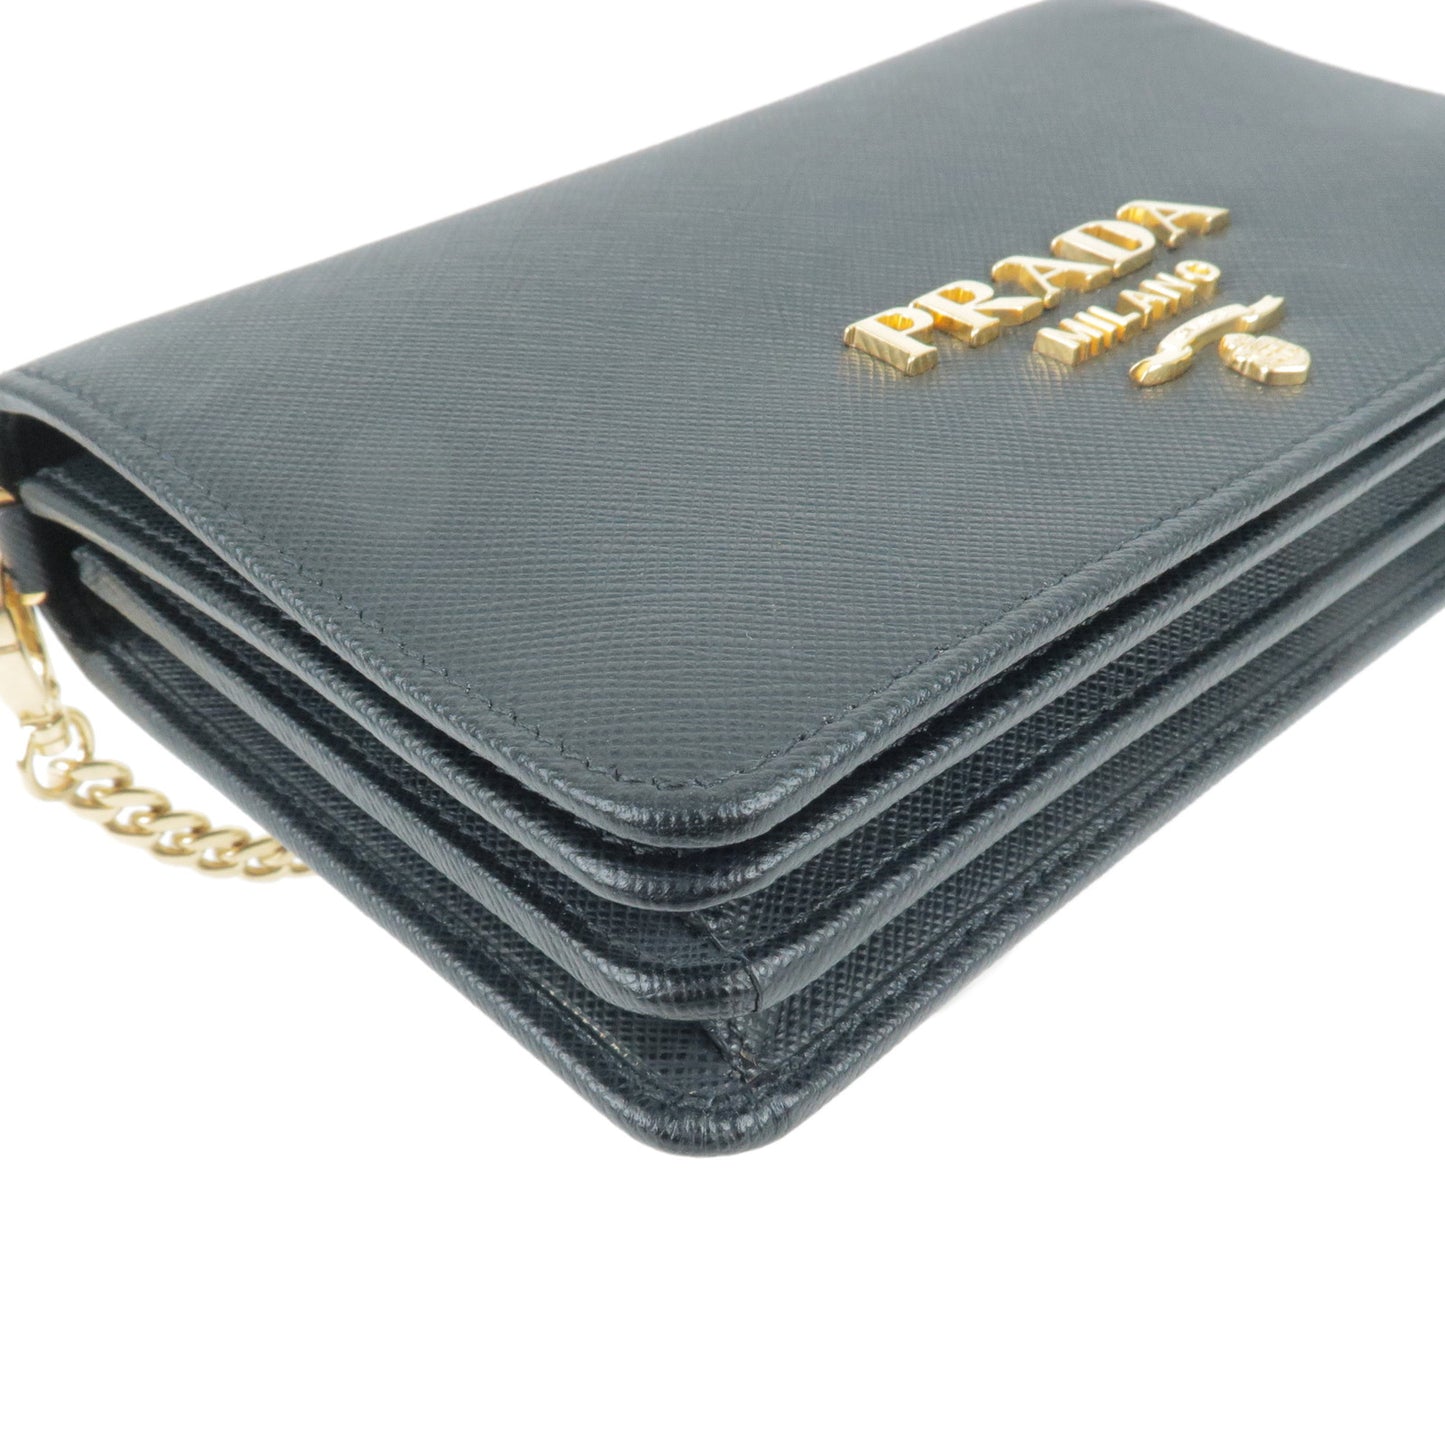 PRADA Leather Chain Wallet WOC Nero Black 1BP006